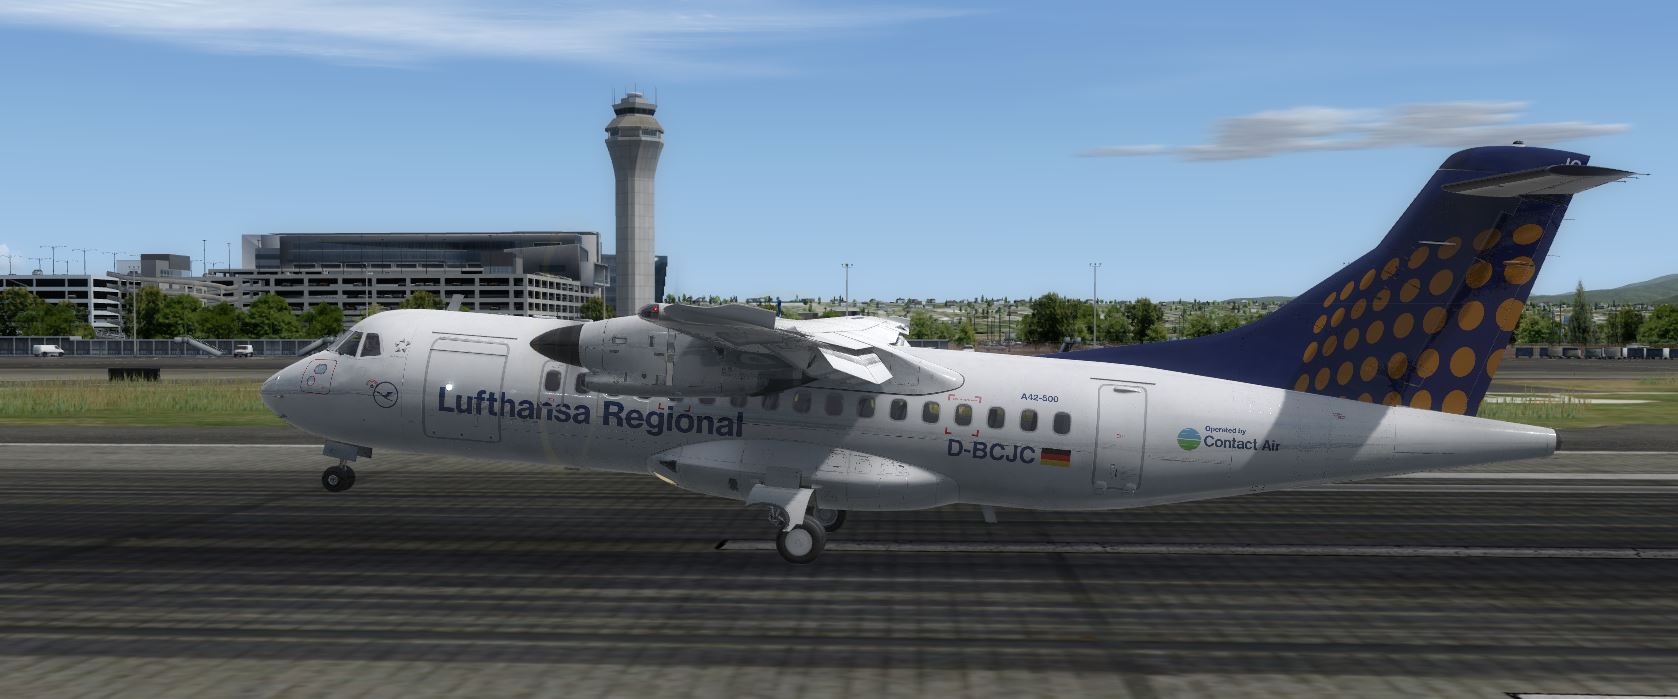 ATR42-500 Lufthansa-8054 